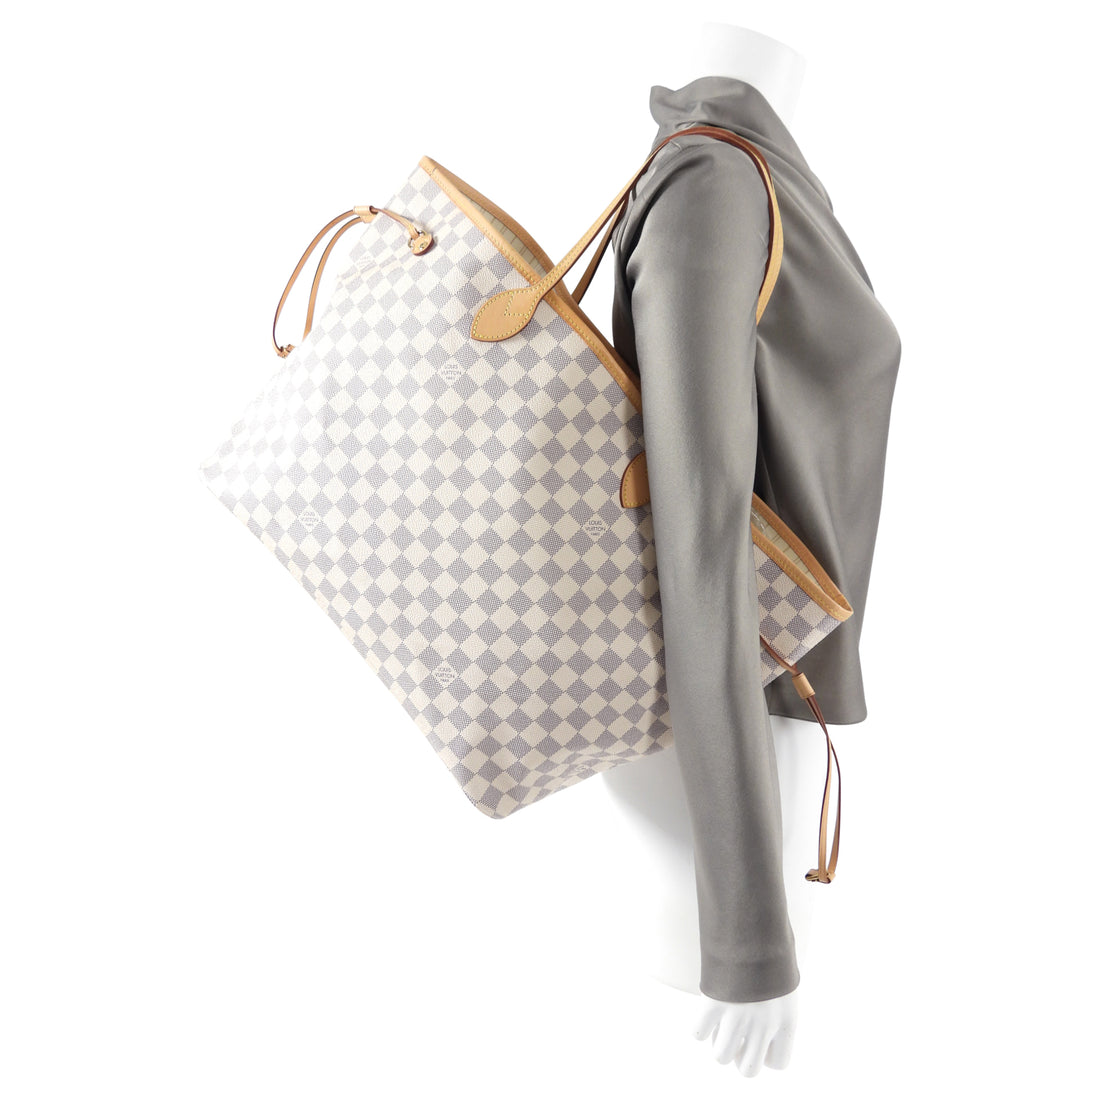 Louis Vuitton Damier Azur Neverfull GM Tote Bag – I MISS YOU VINTAGE